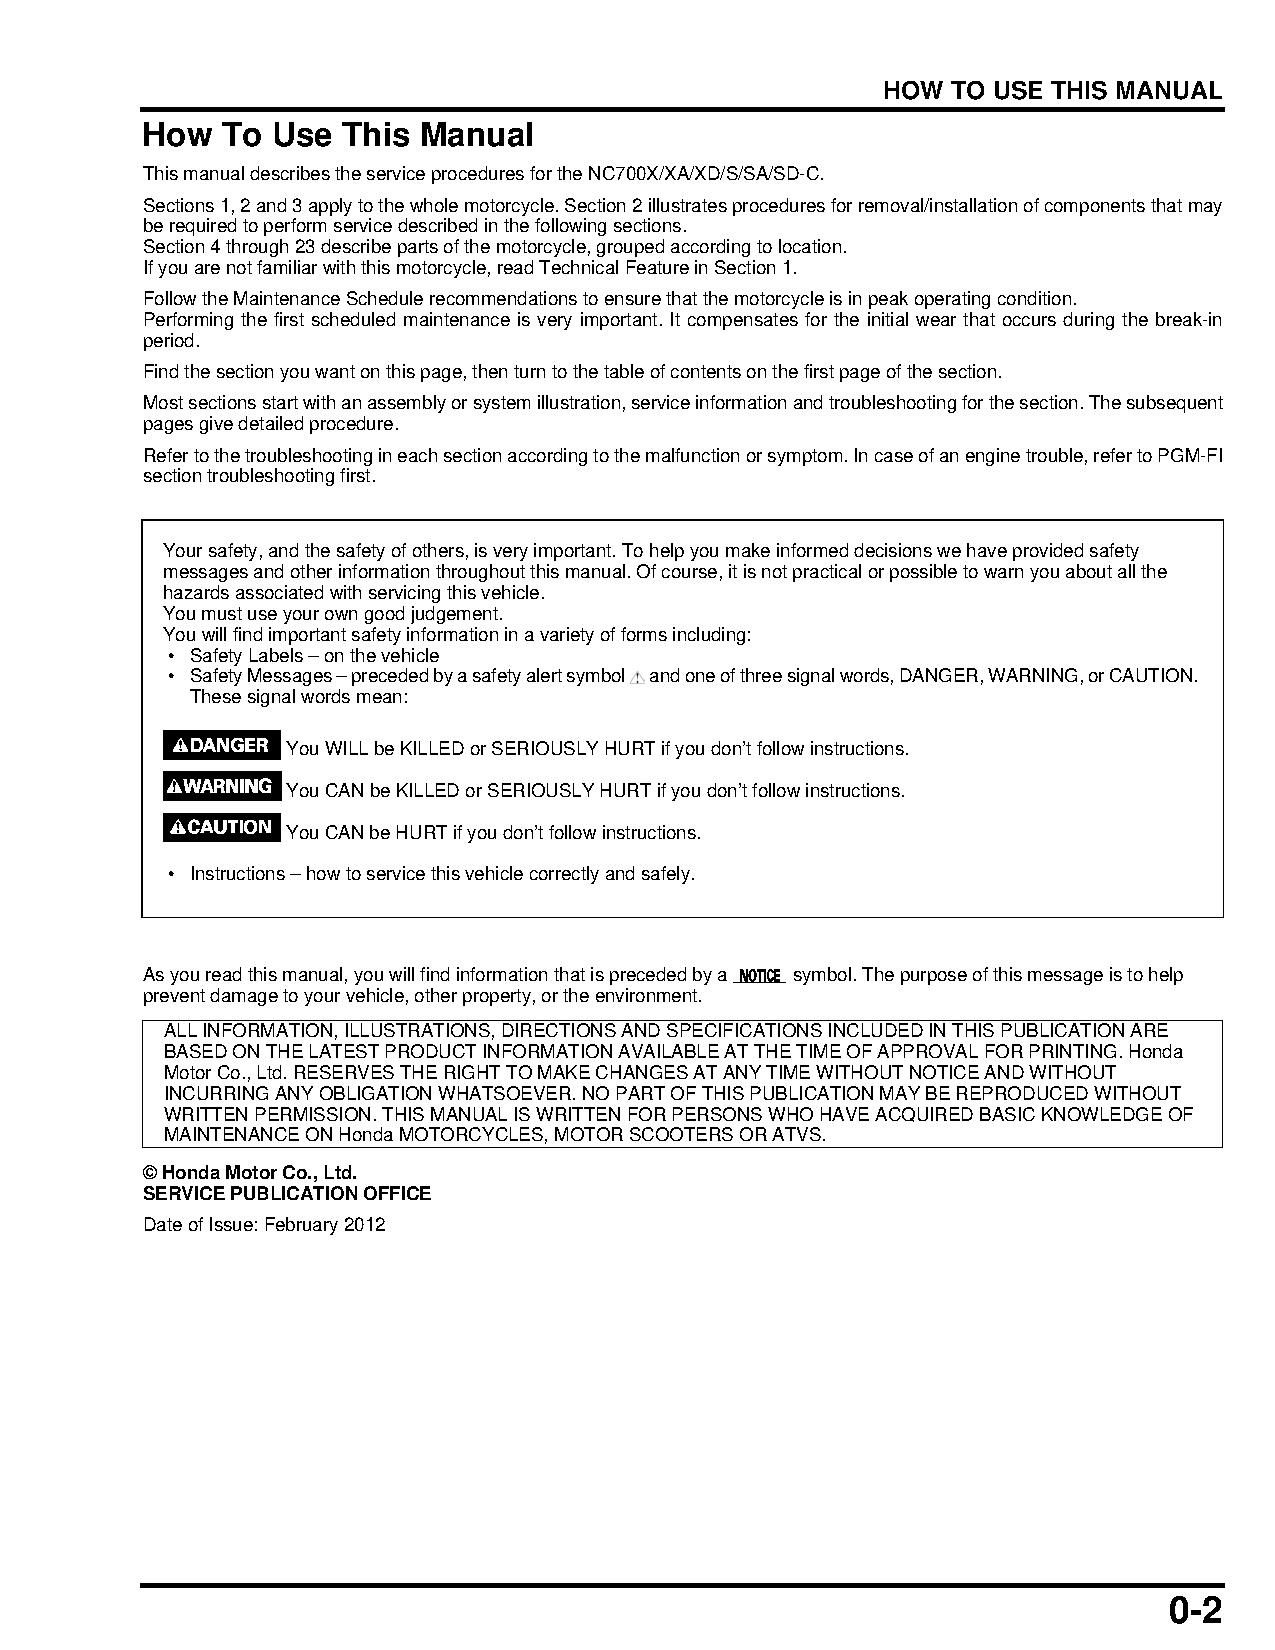 File:Honda NC700 Service Manual.pdf